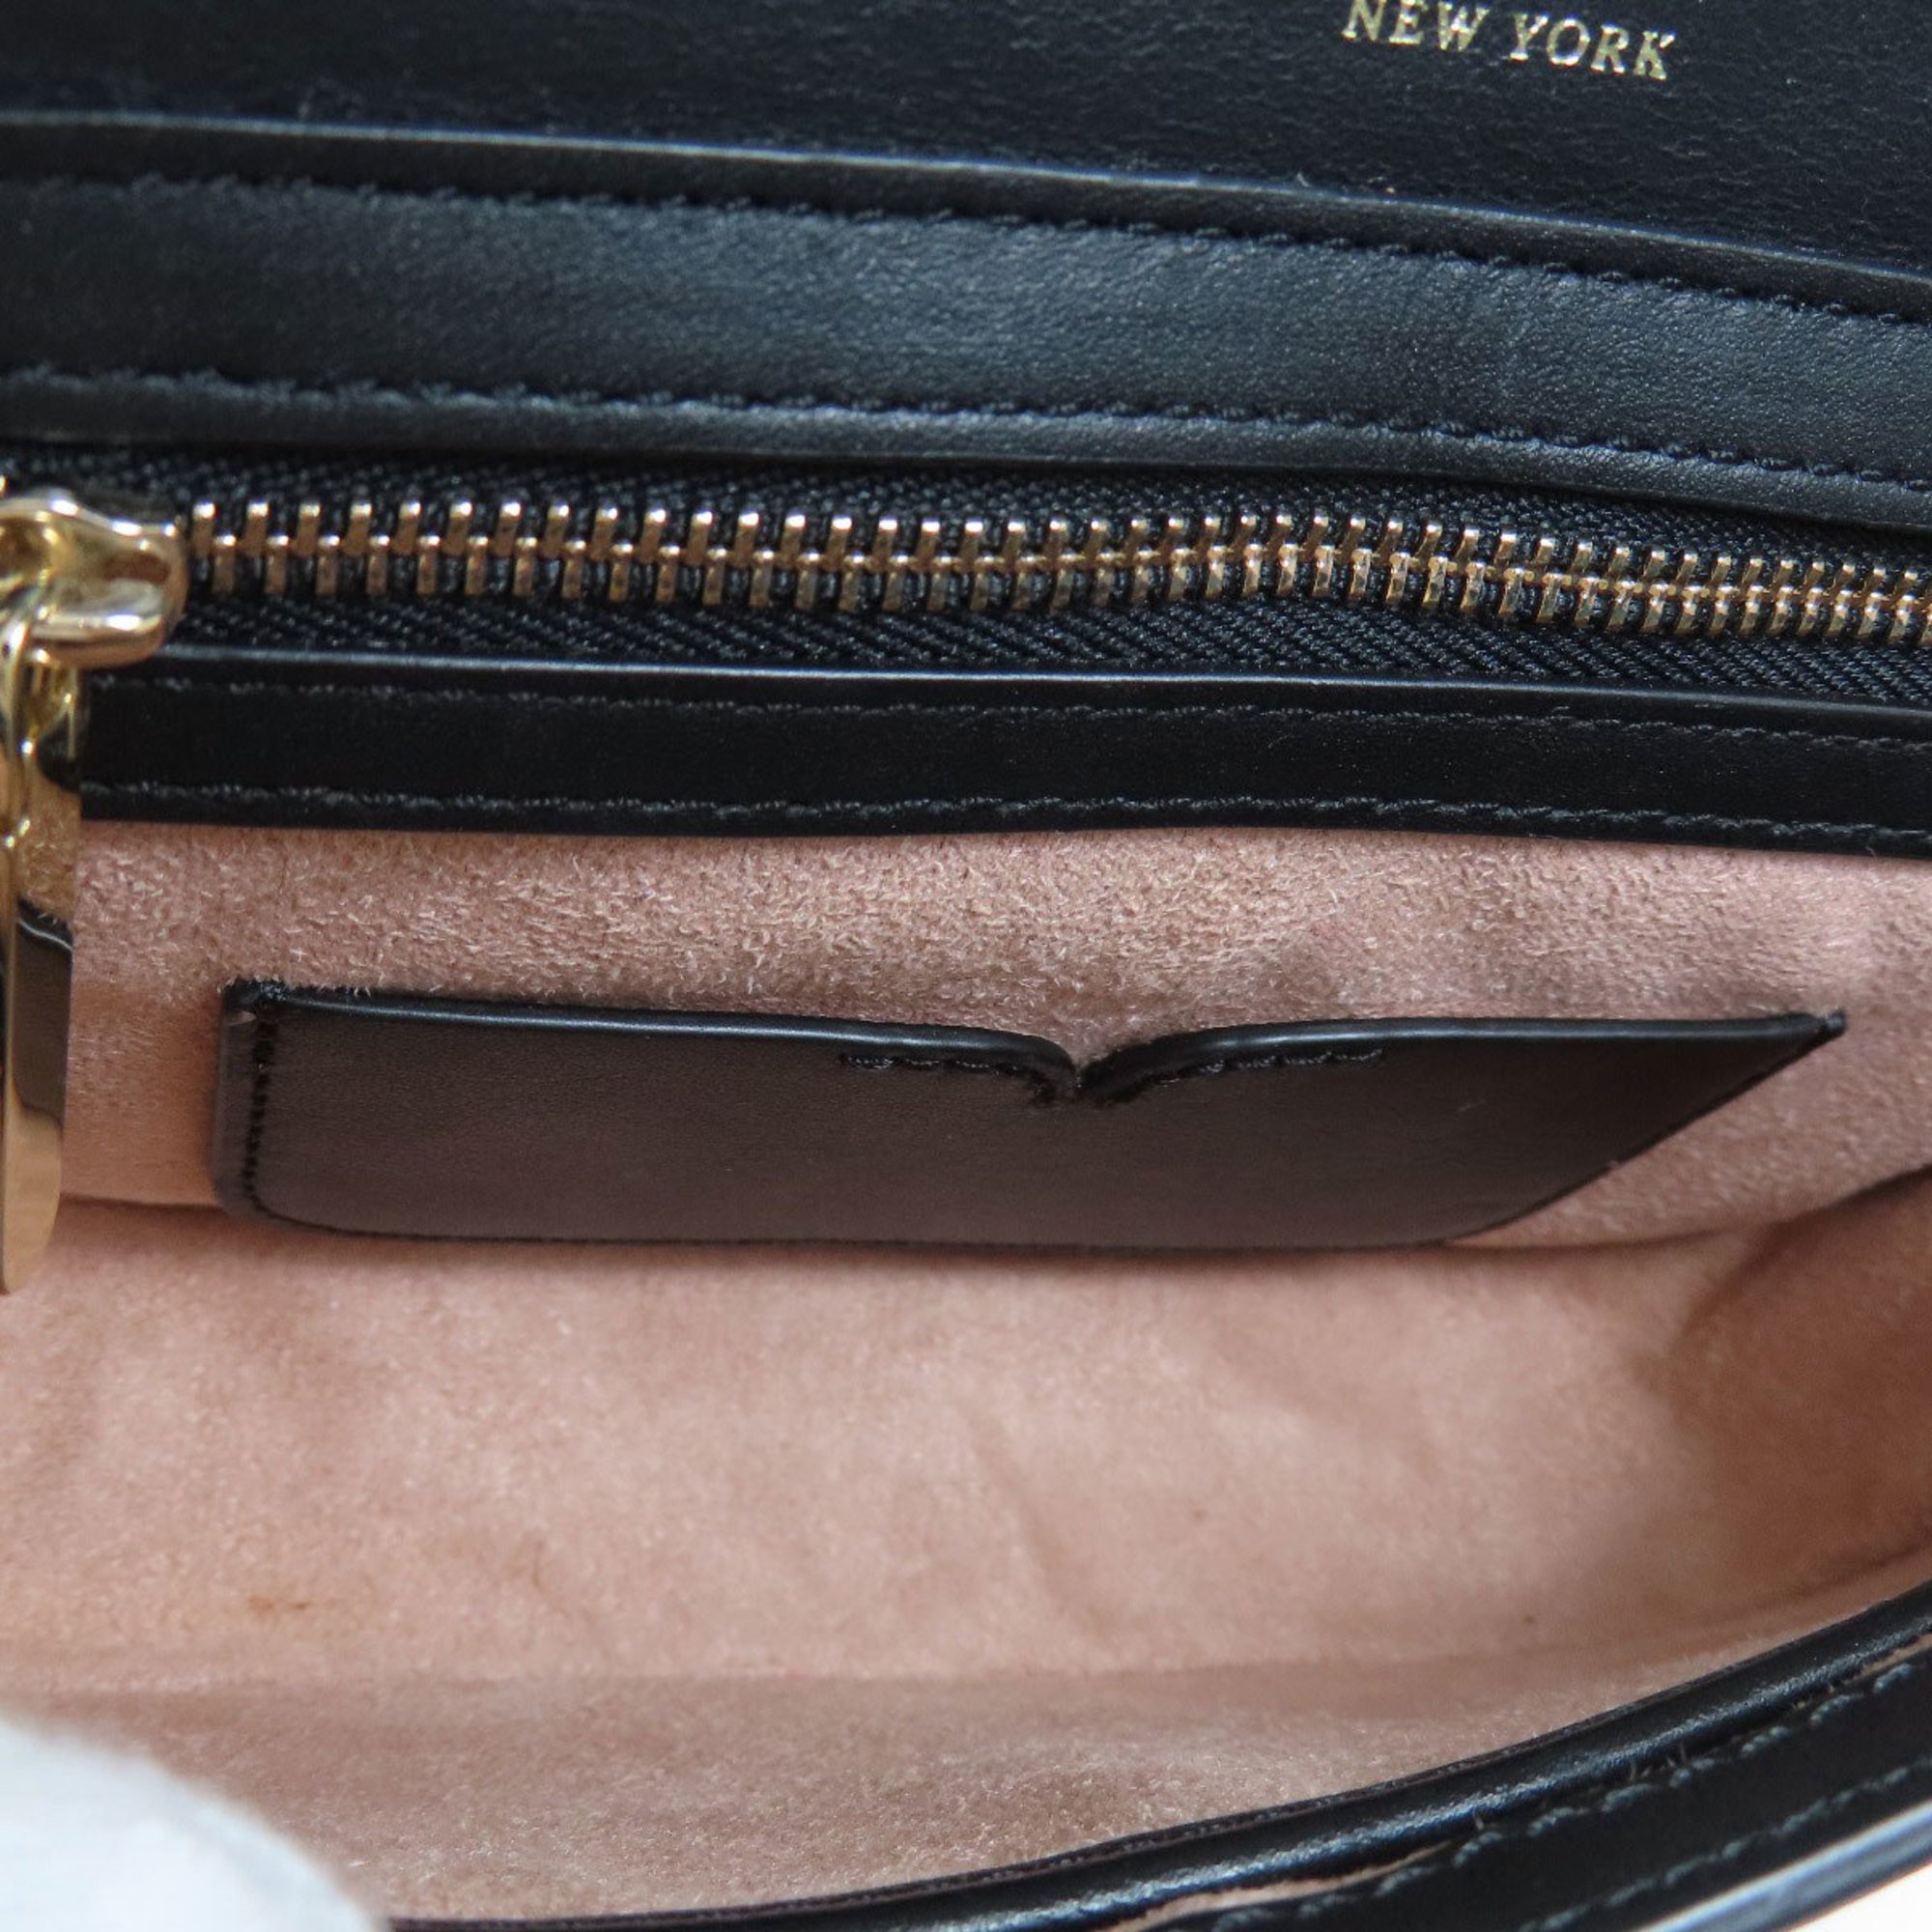 Kate Spade Heart Motif Shoulder Bag Leather Women's